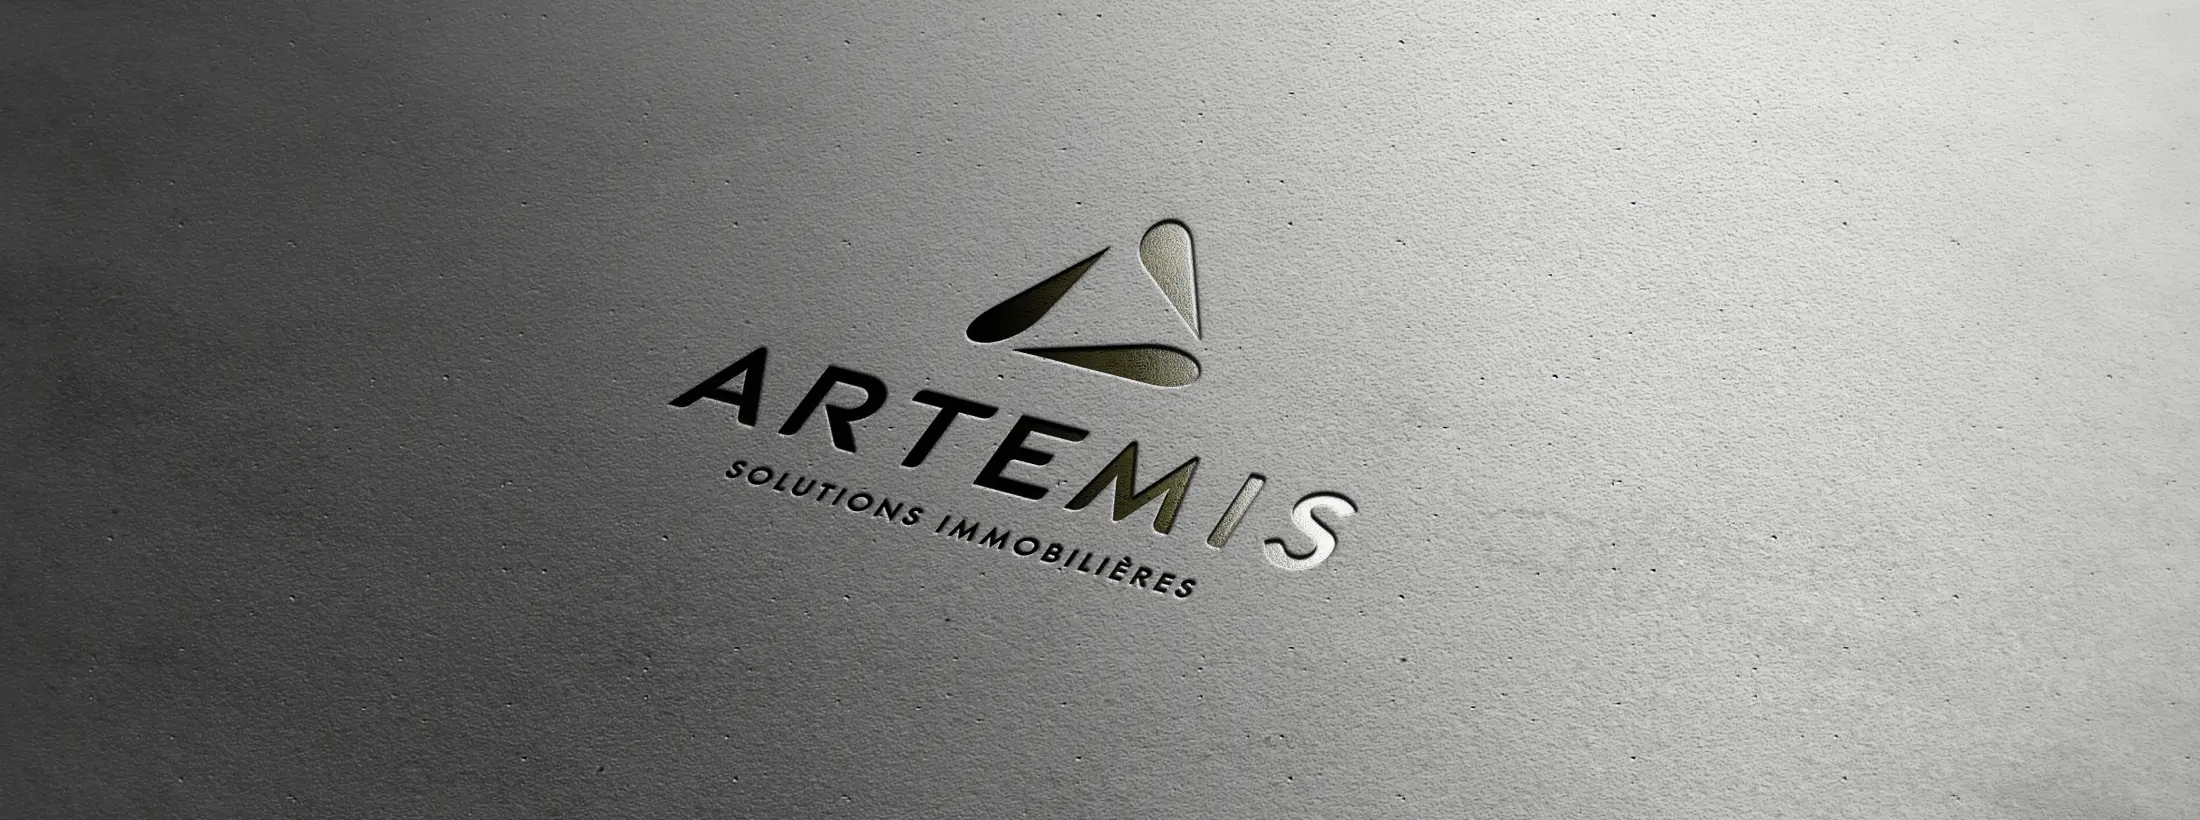 logo artemis branding design phone identite visuelle osb communication